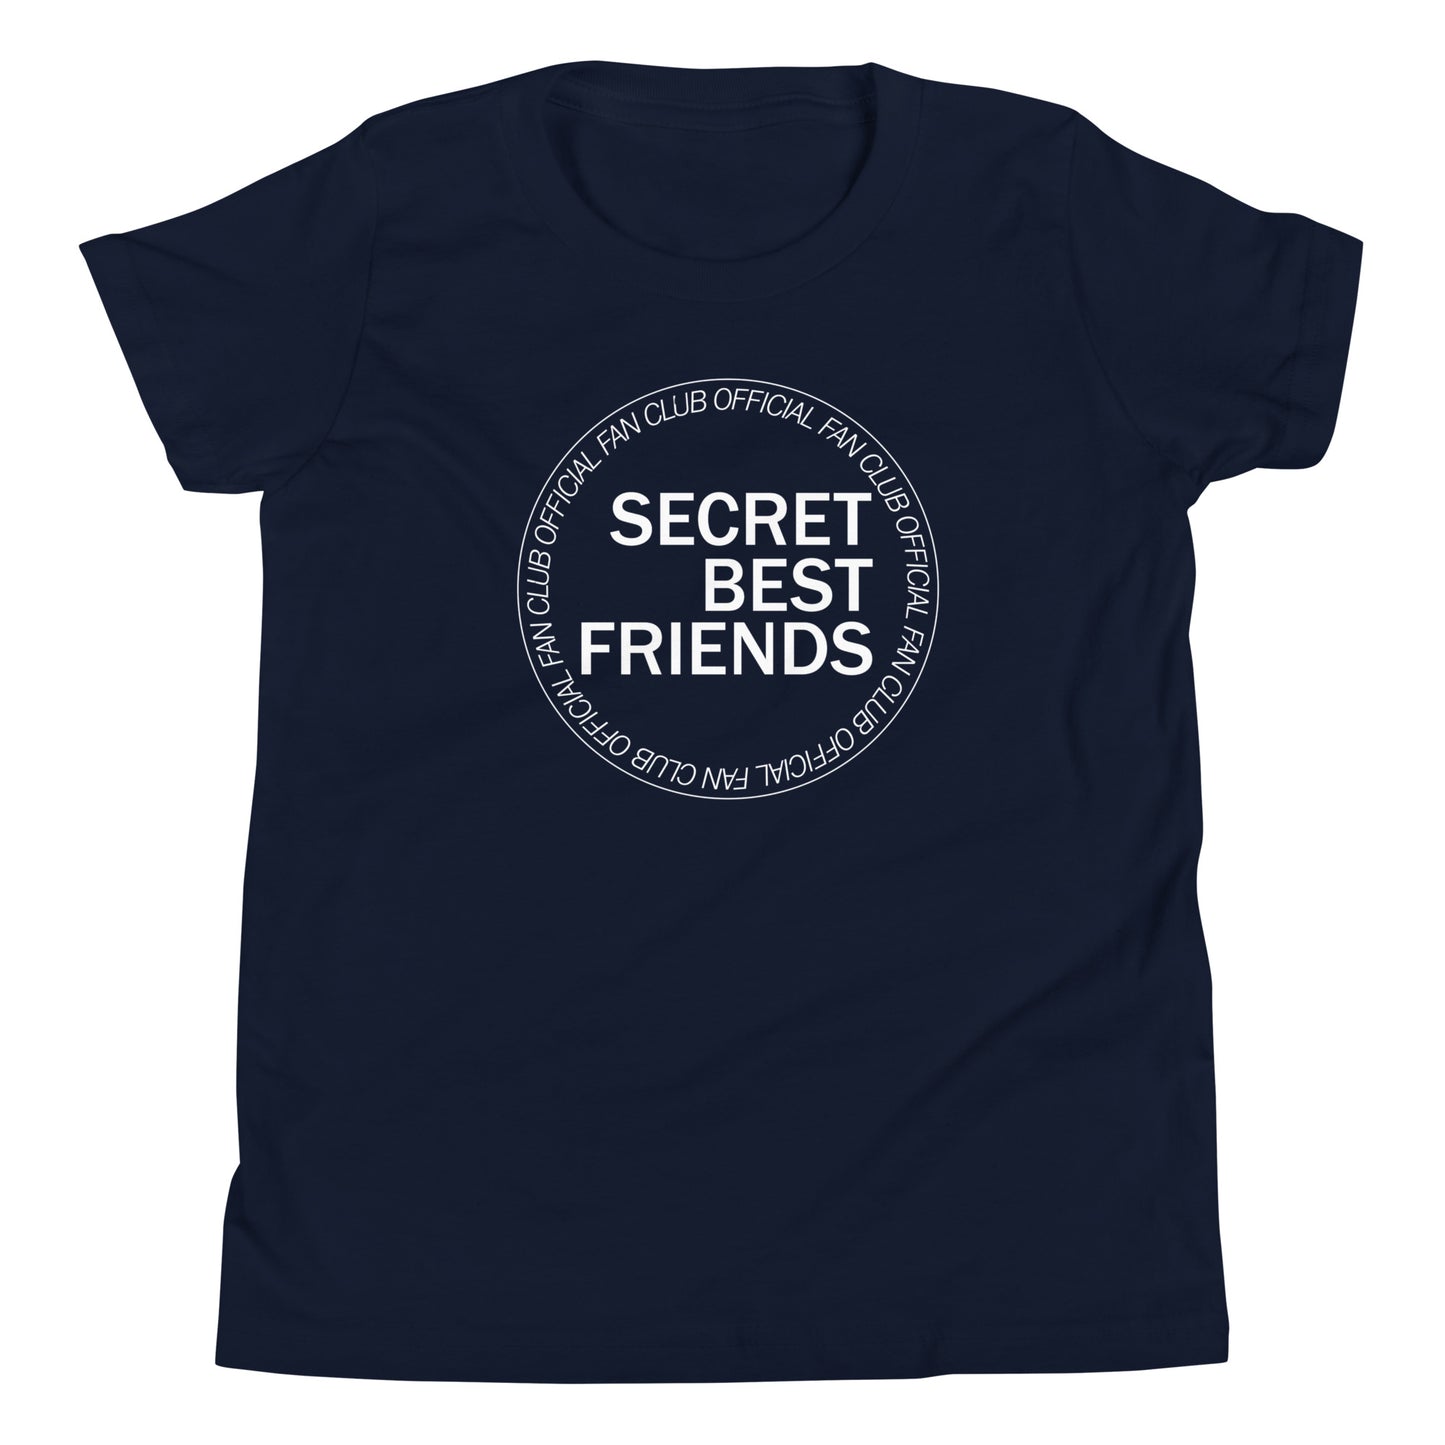 Fan Club - Printed Youth Short Sleeve T-Shirt